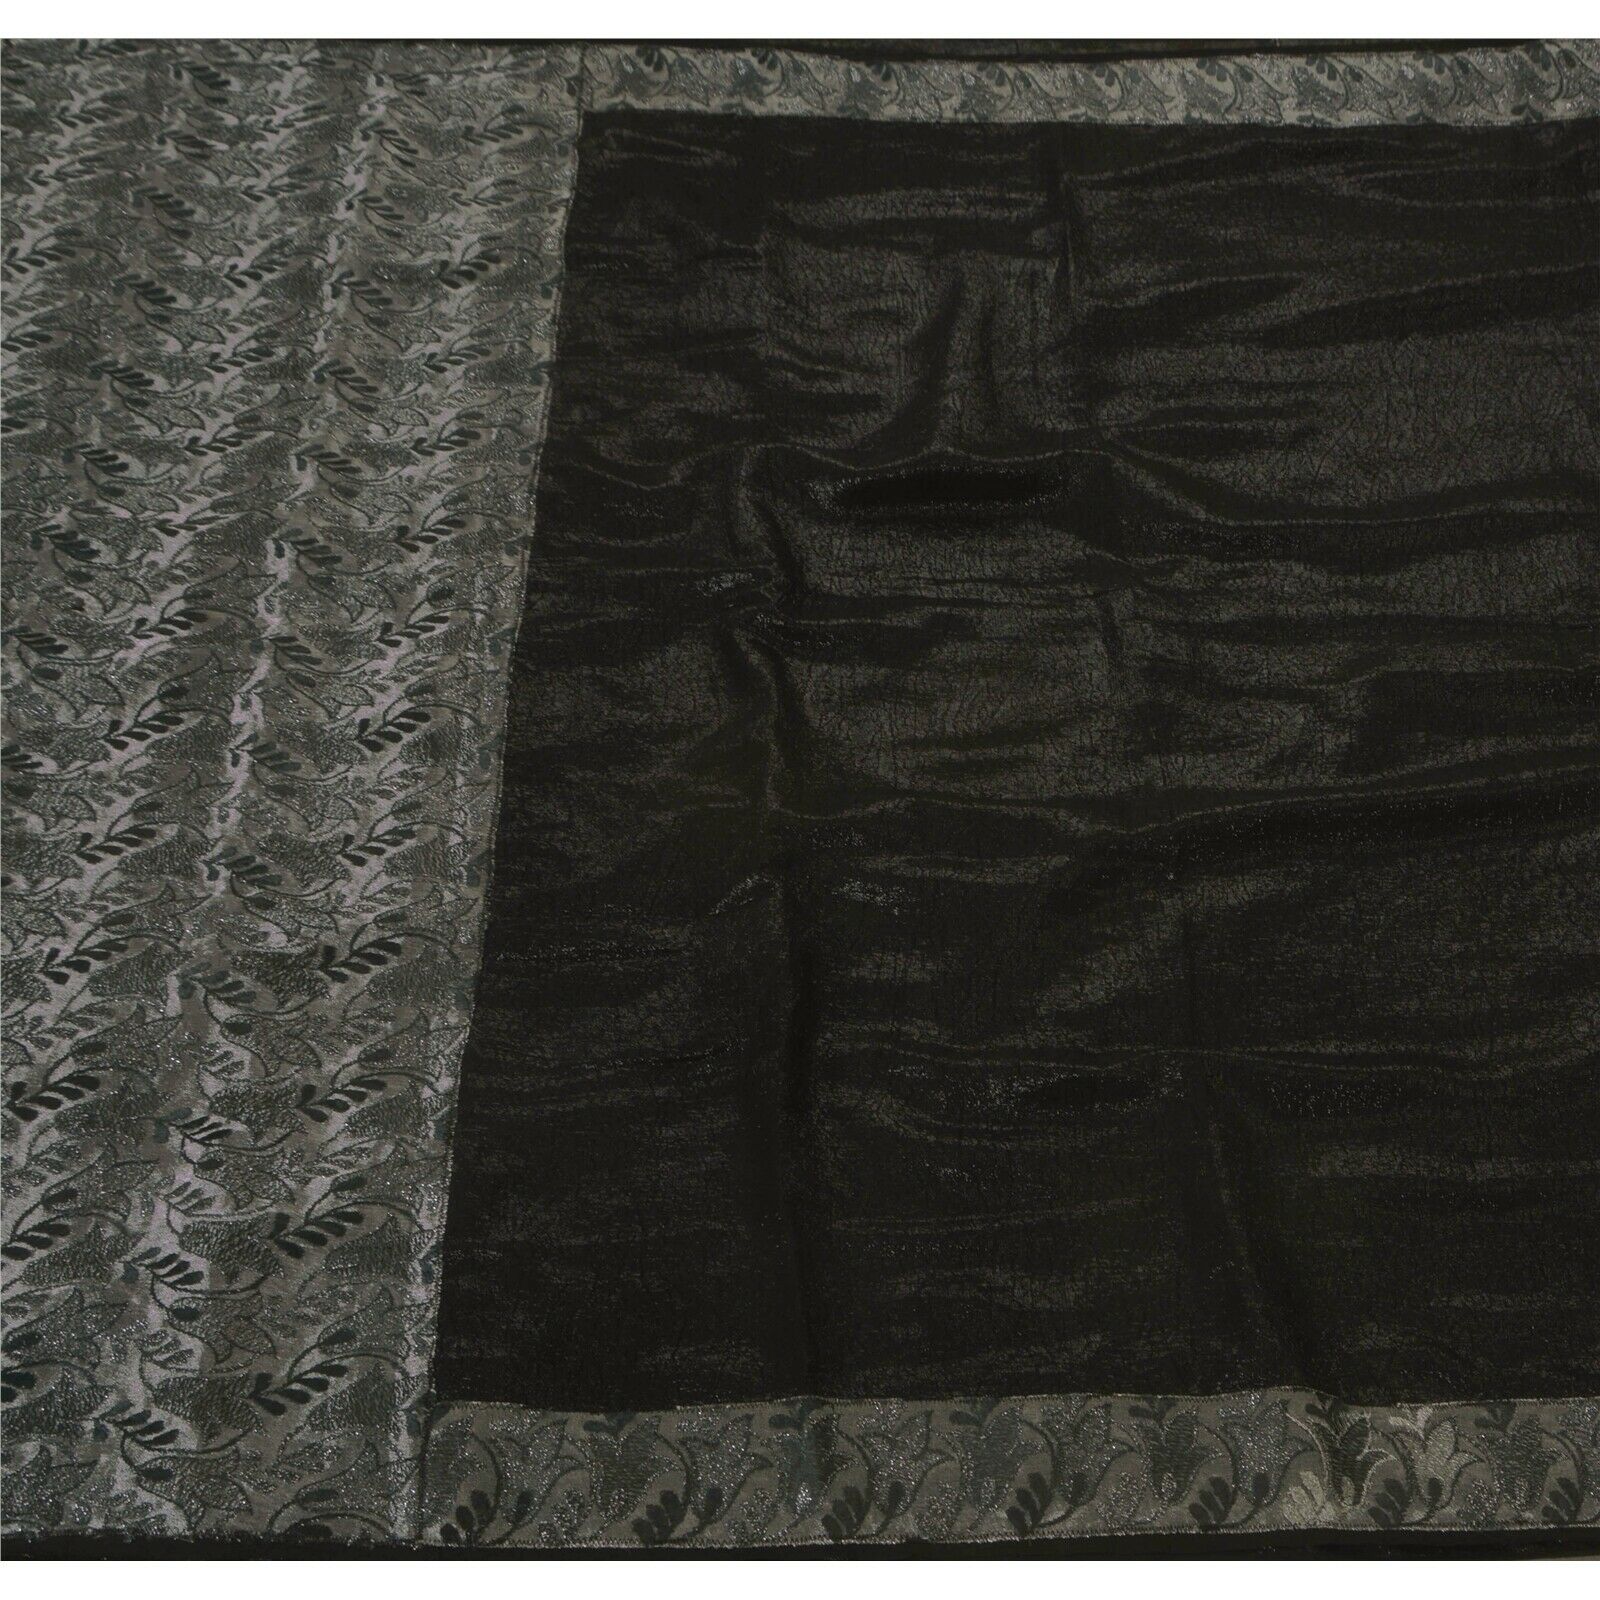 Tcw Vintage Black Saree Art Silk Embroidered Woven Craft Fabric 5 Yd Ethnic Sari